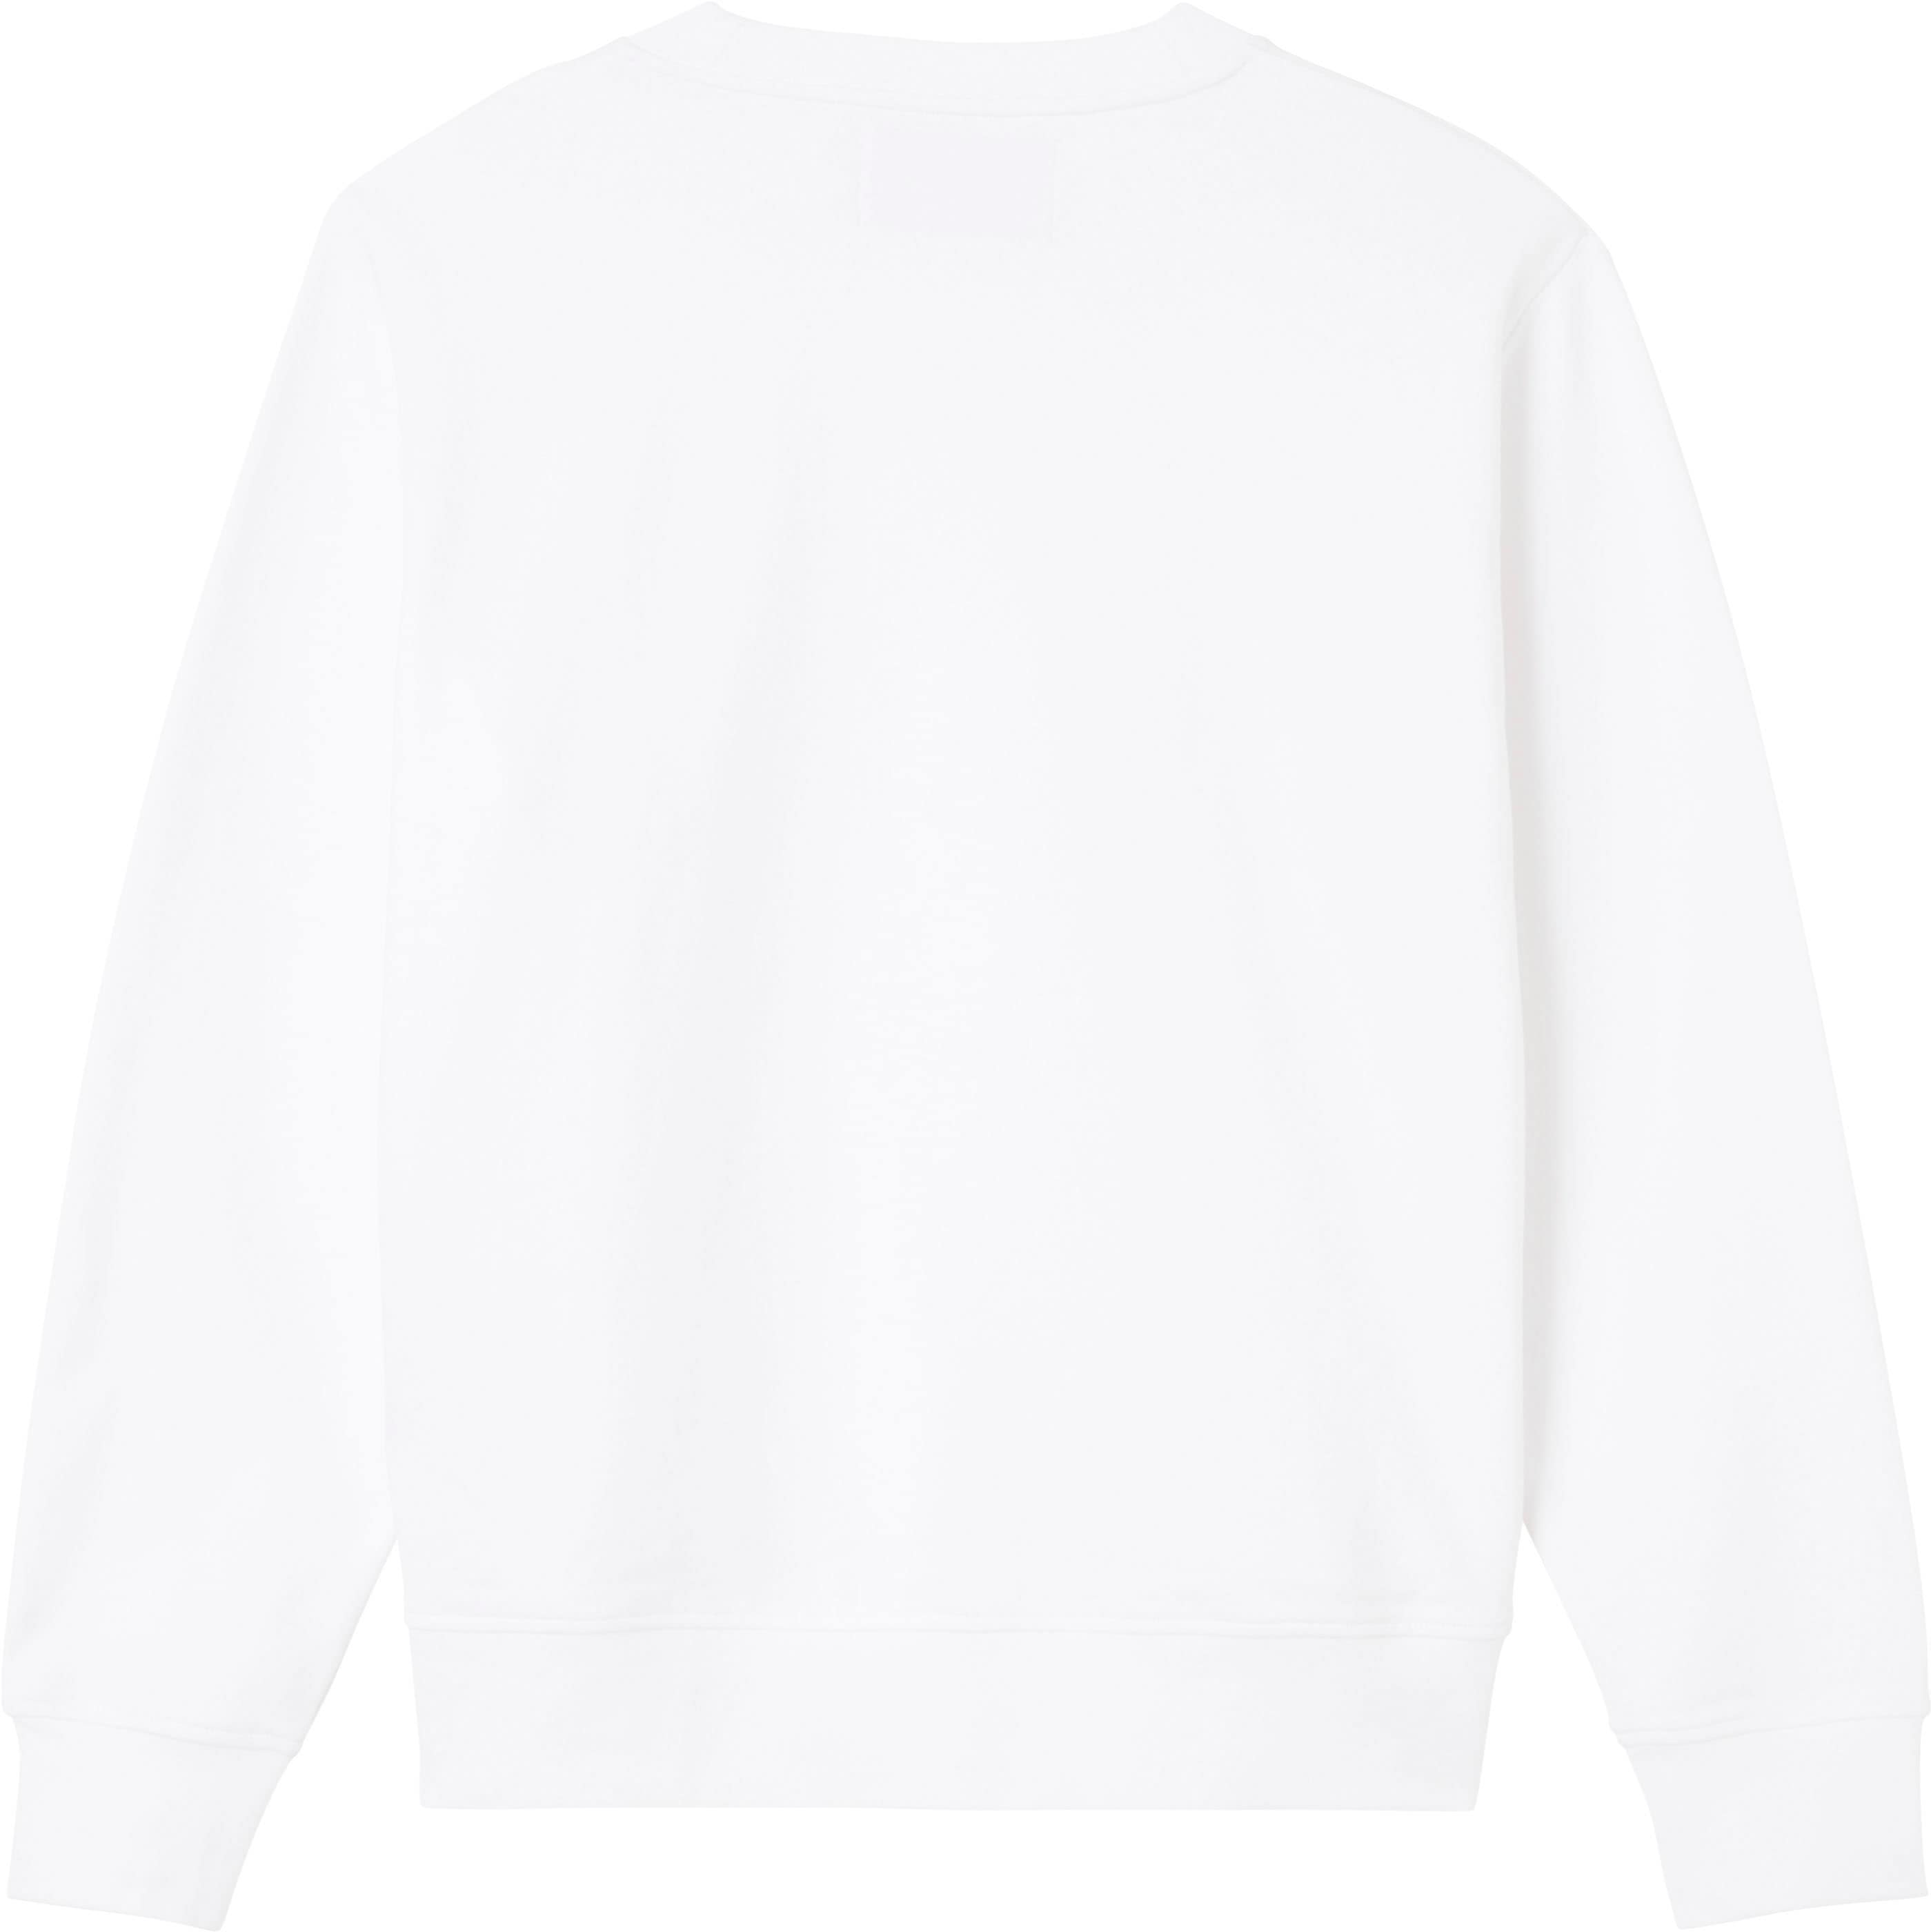 Calvin Klein Jeans Sweatshirt CORE MONOGRAM SWEATSHIRT mit Calvin Klein Jea günstig online kaufen